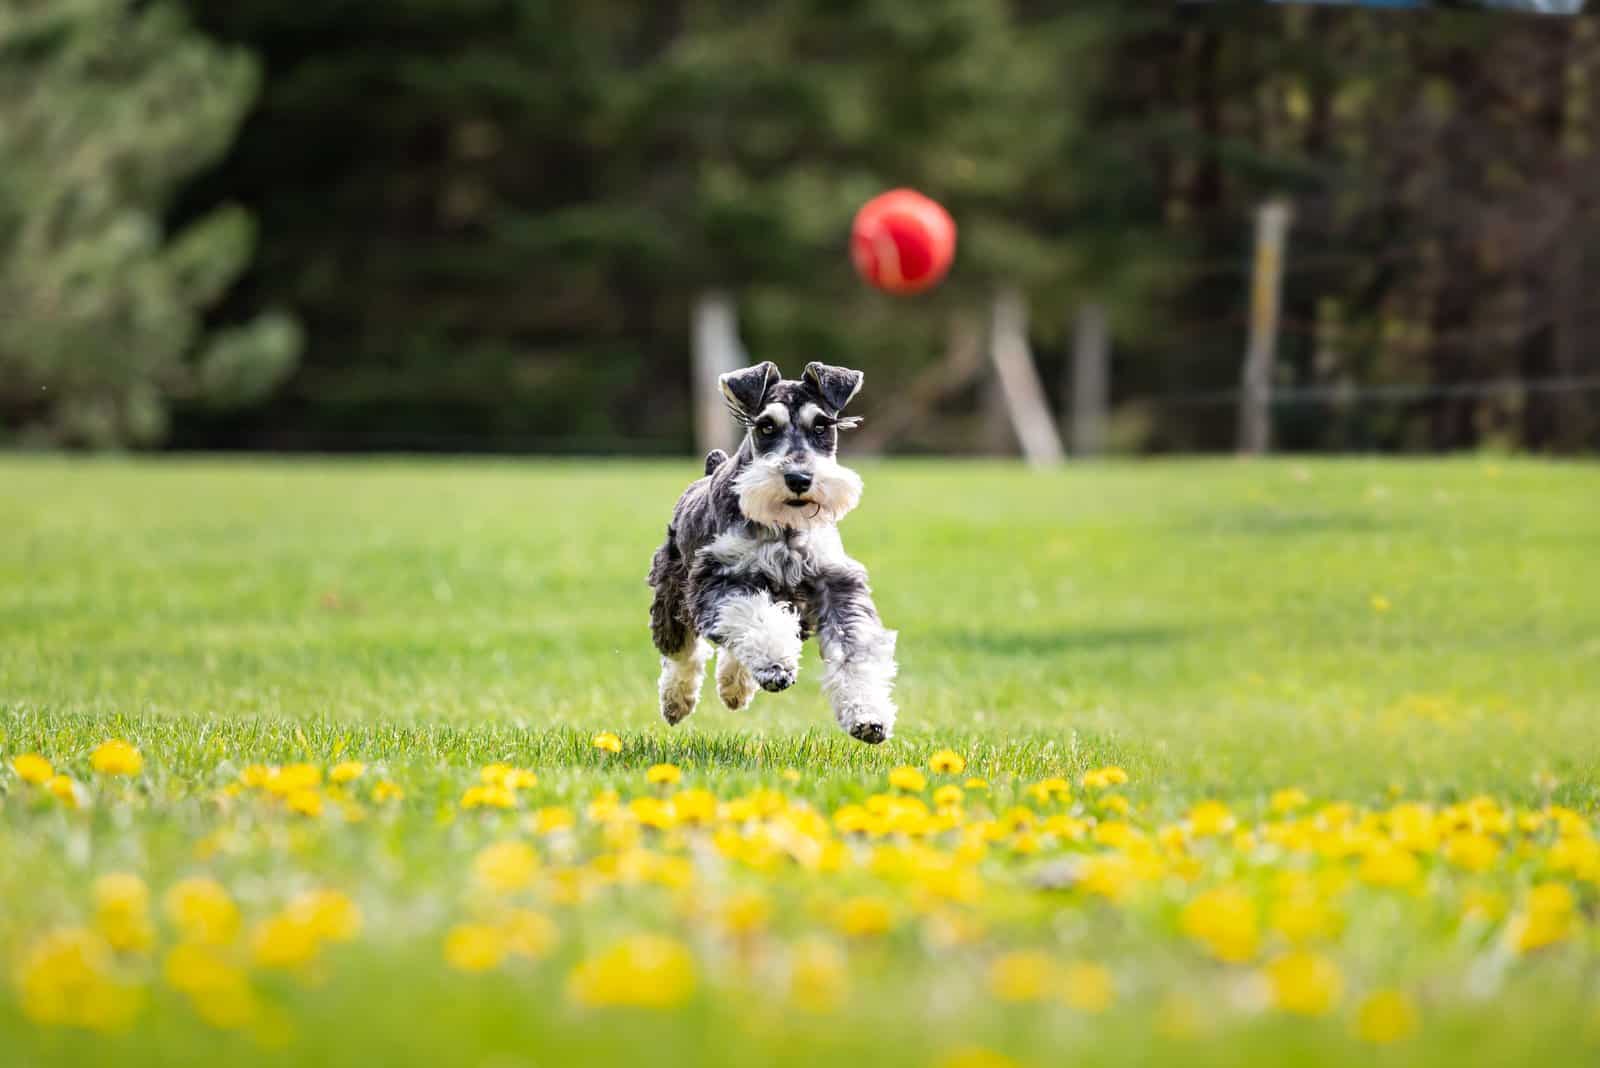 mini schnauzer puppy chasing red ball